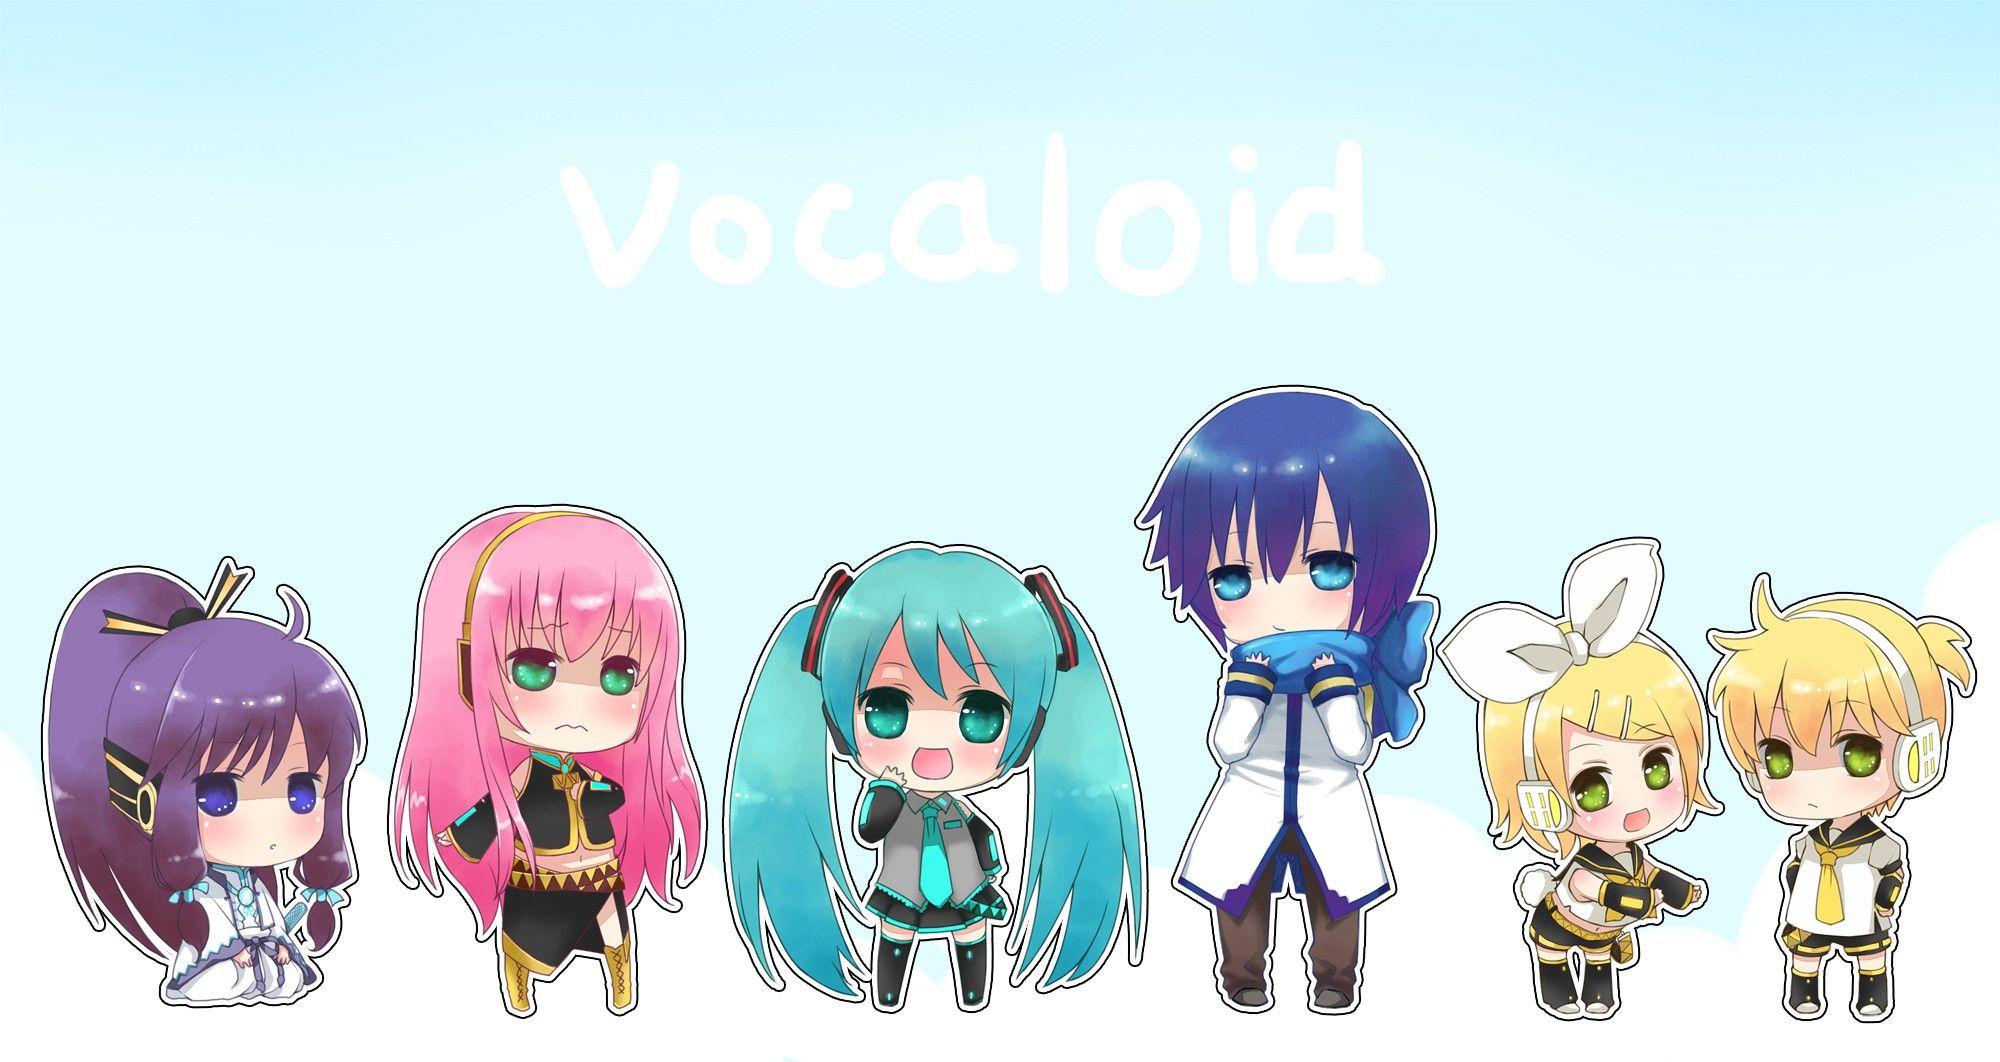 Anime Chibi Vocaloid Wallpaper Free HD. I HD Image